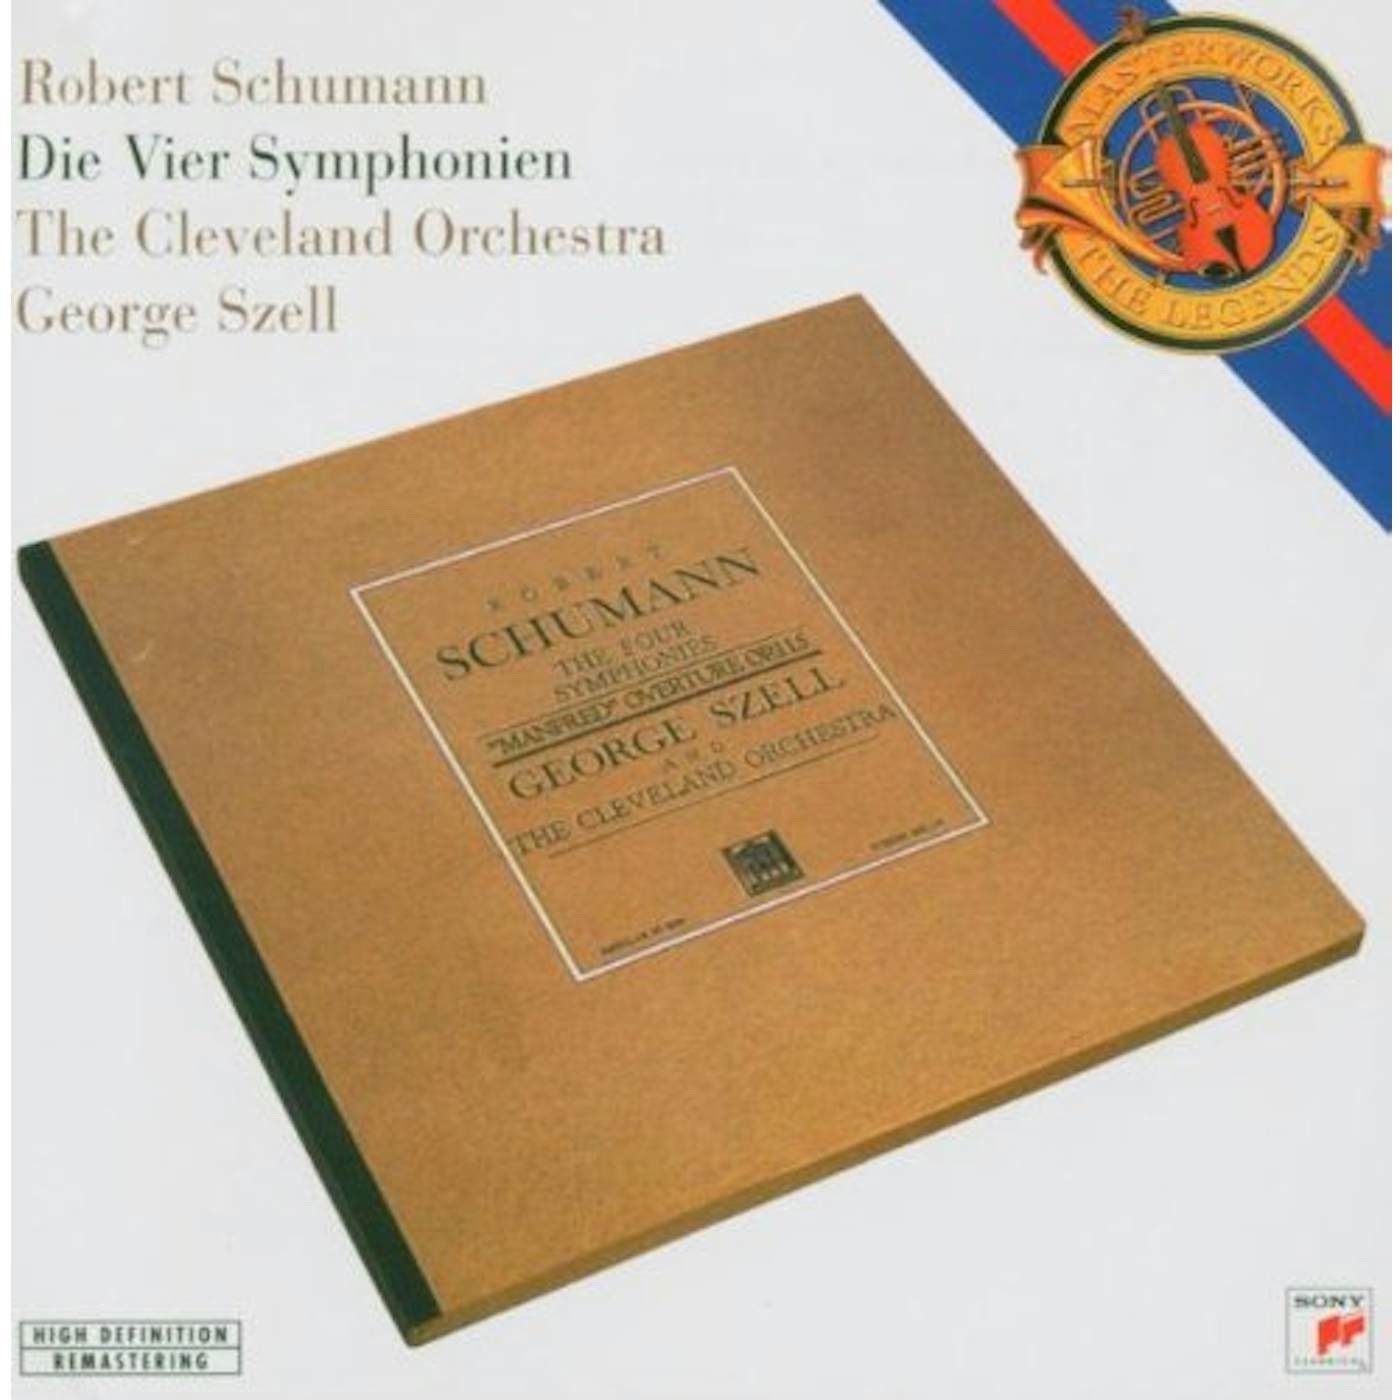 George Szell SYMPHONIES NO. 1 ET NO. 4 (SCHUMANN) CD